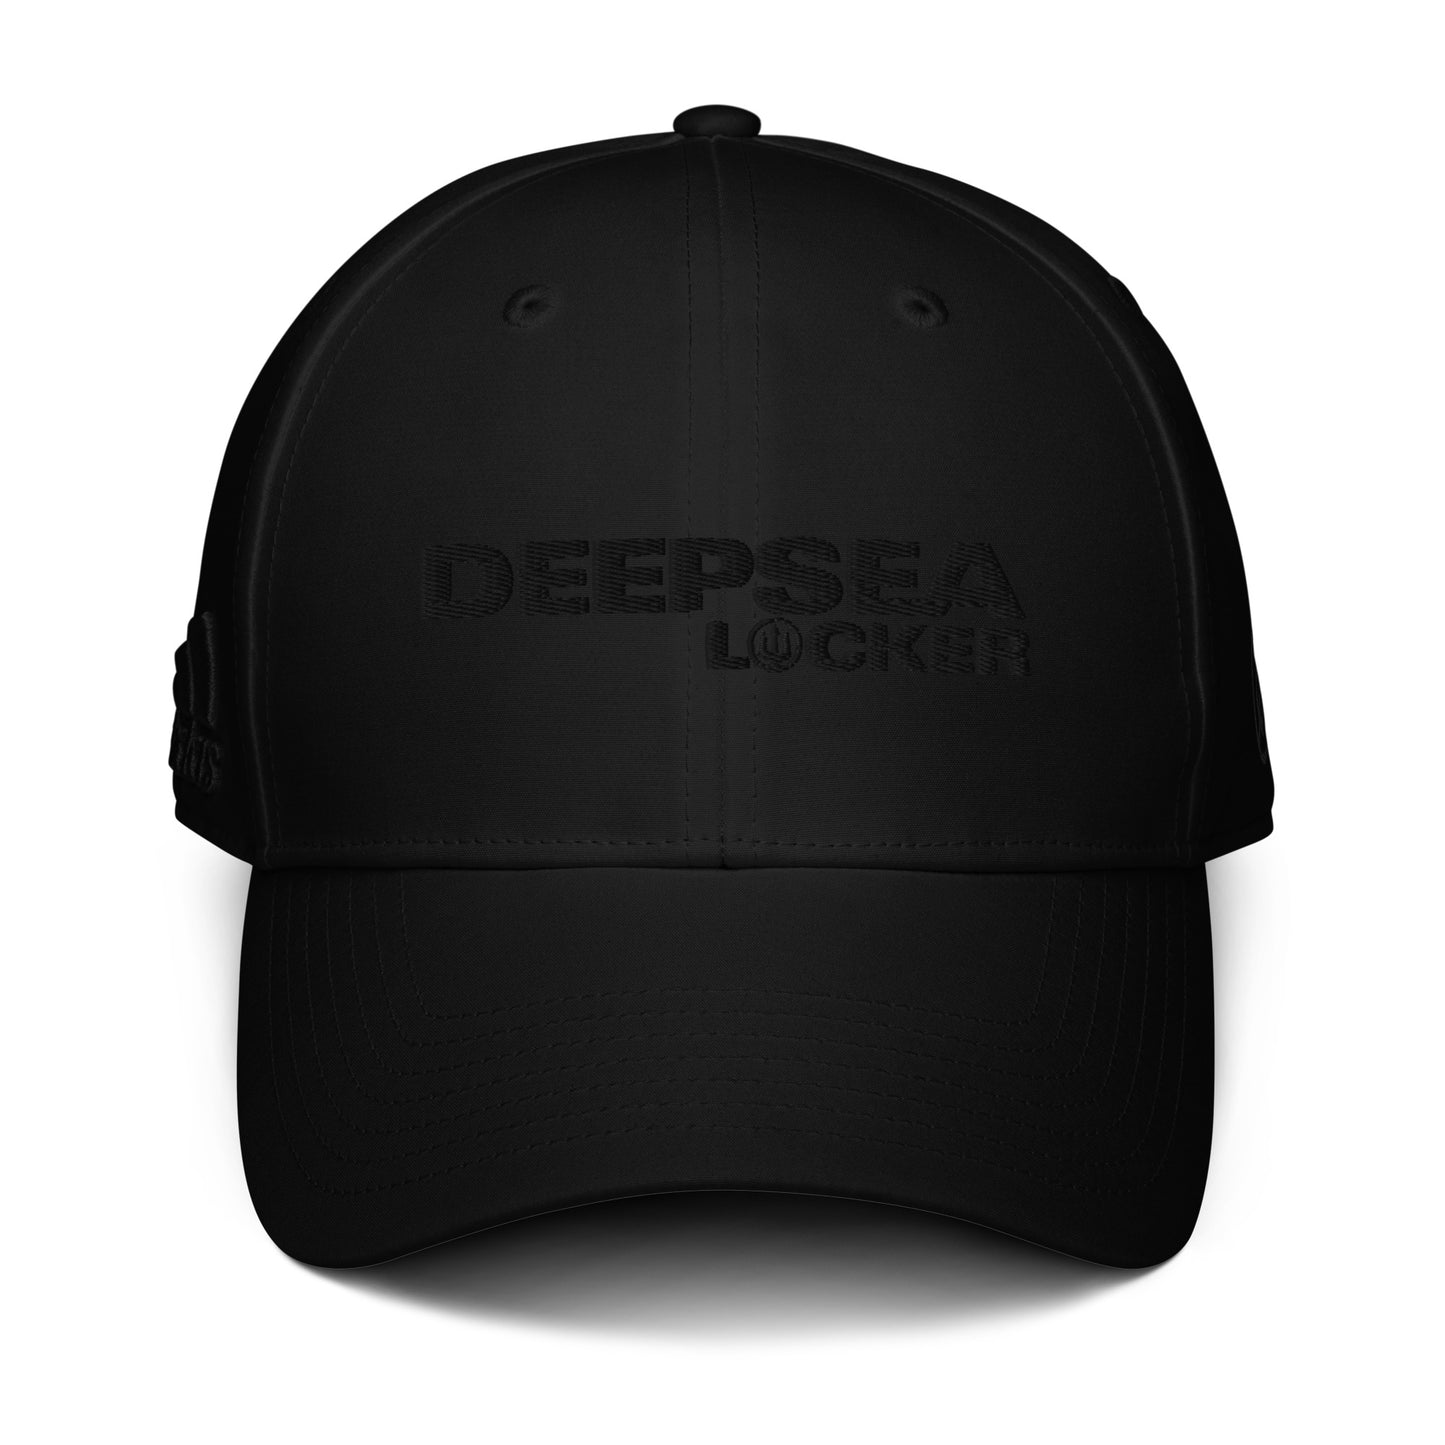 DEEPSEA Locker Black Out / adidas dad hat